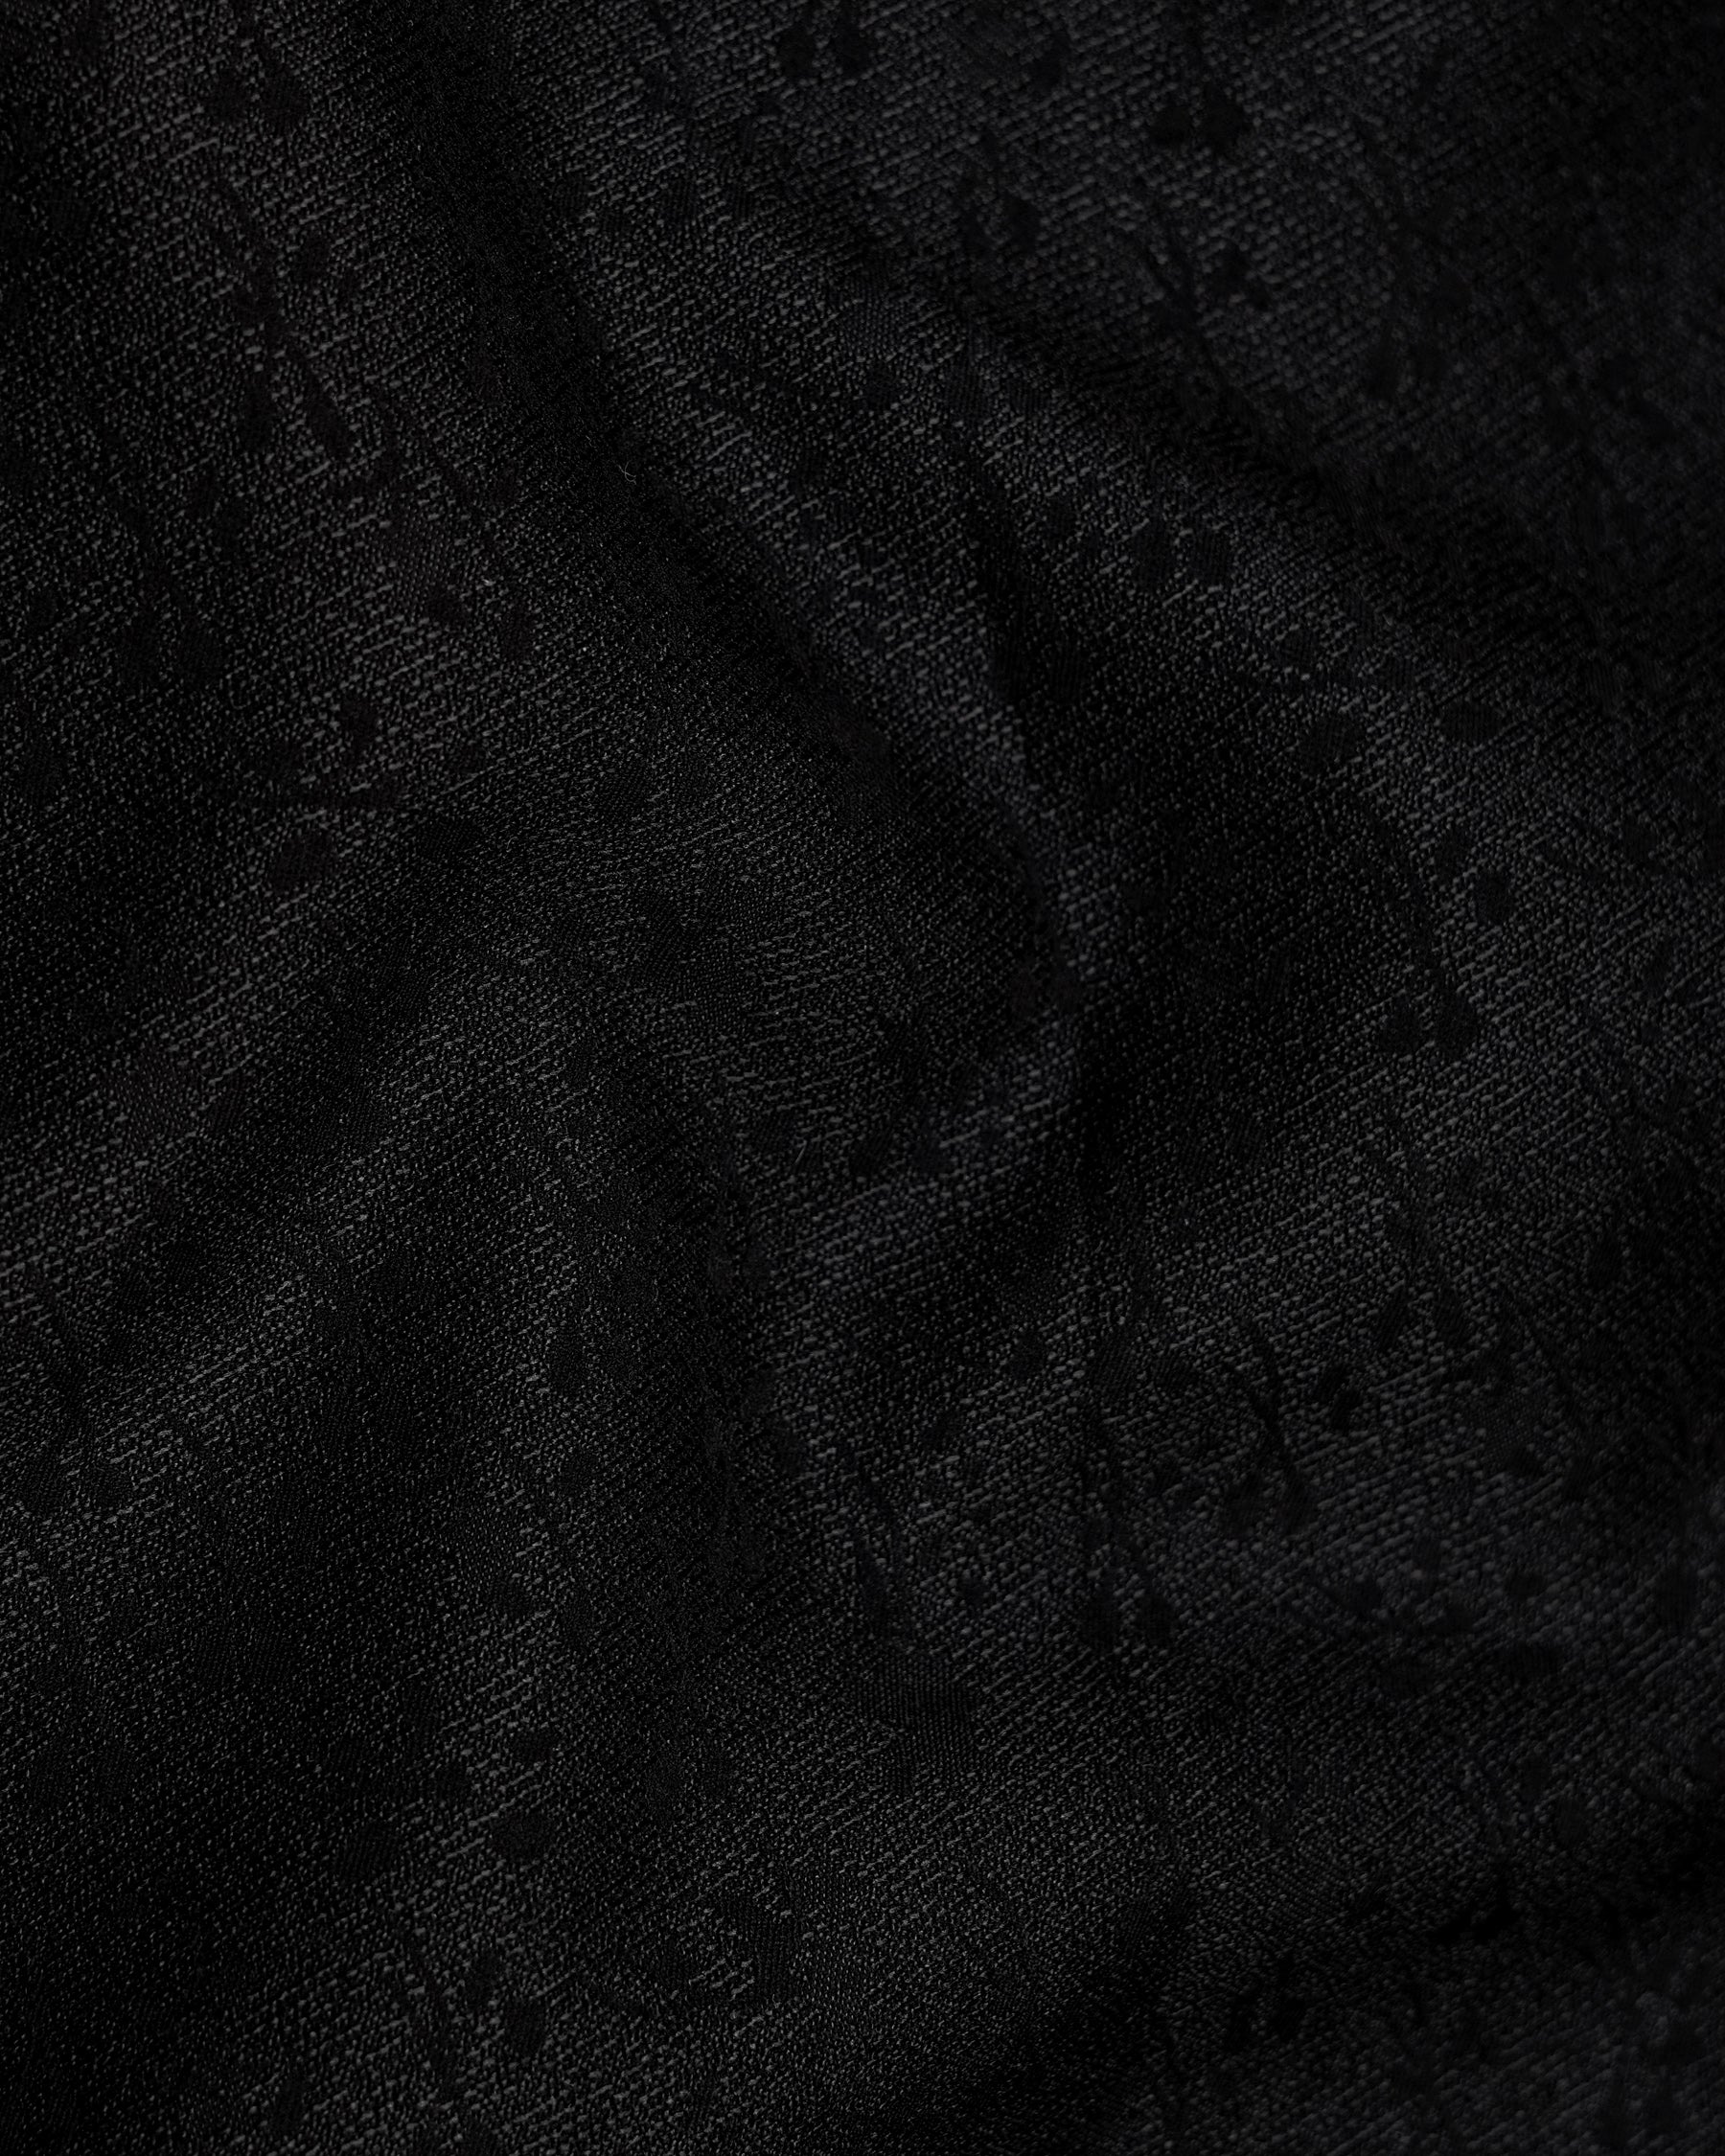 Jade Black Ditzy Textured Waistcoat V2103-36, V2103-38, V2103-40, V2103-42, V2103-44, V2103-46, V2103-48, V2103-50, V2103-52, V2103-54, V2103-56, V2103-58, V2103-60